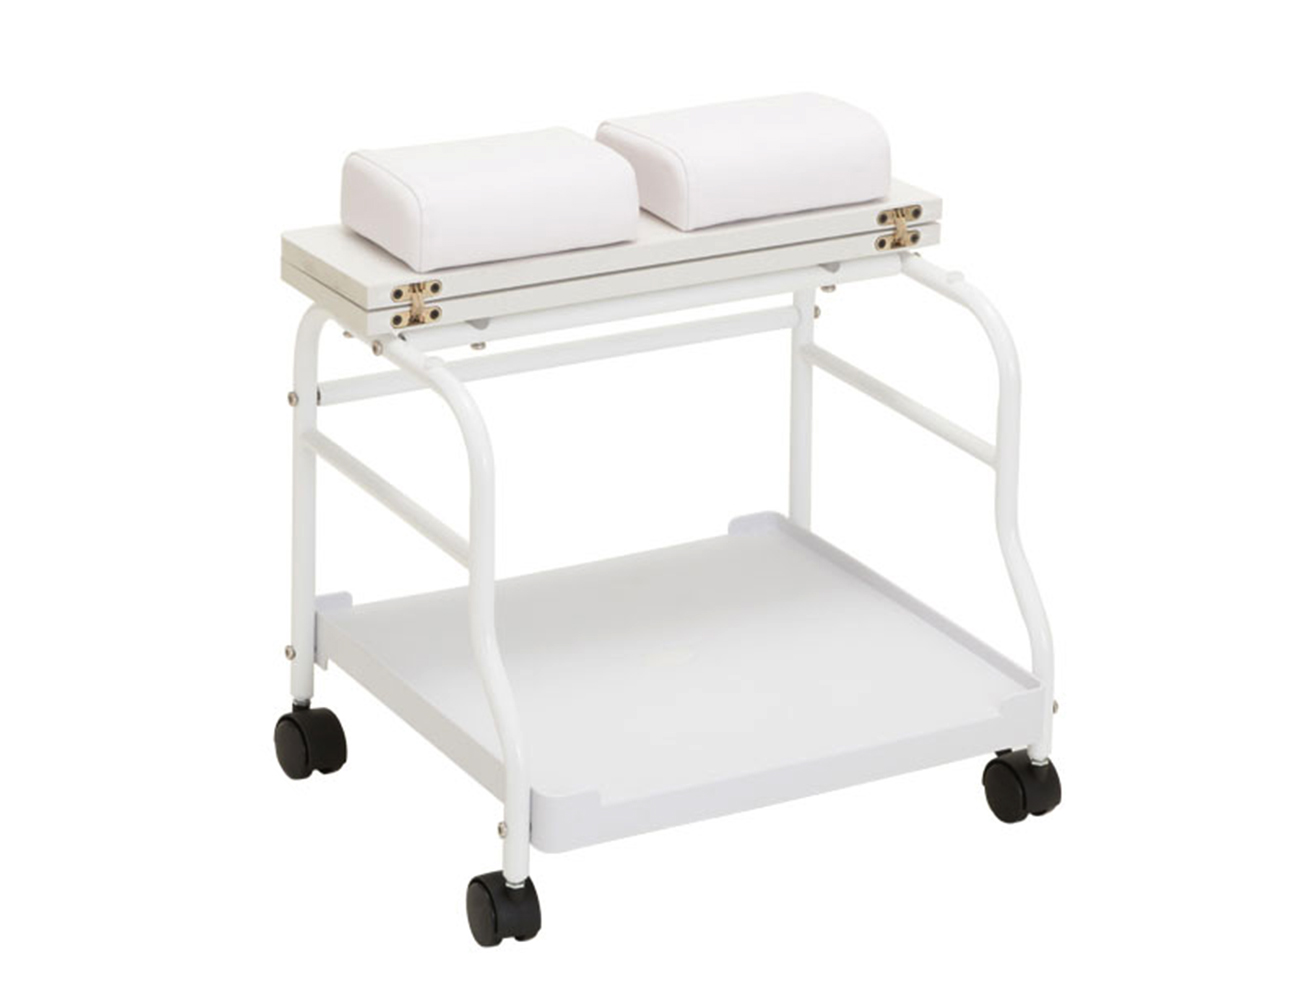 

Elitzia ET27969 Beauty Salon Nail Salon Or Foot Bath Spa Portable Trolley Cart For Foot Rest Or Pedicure